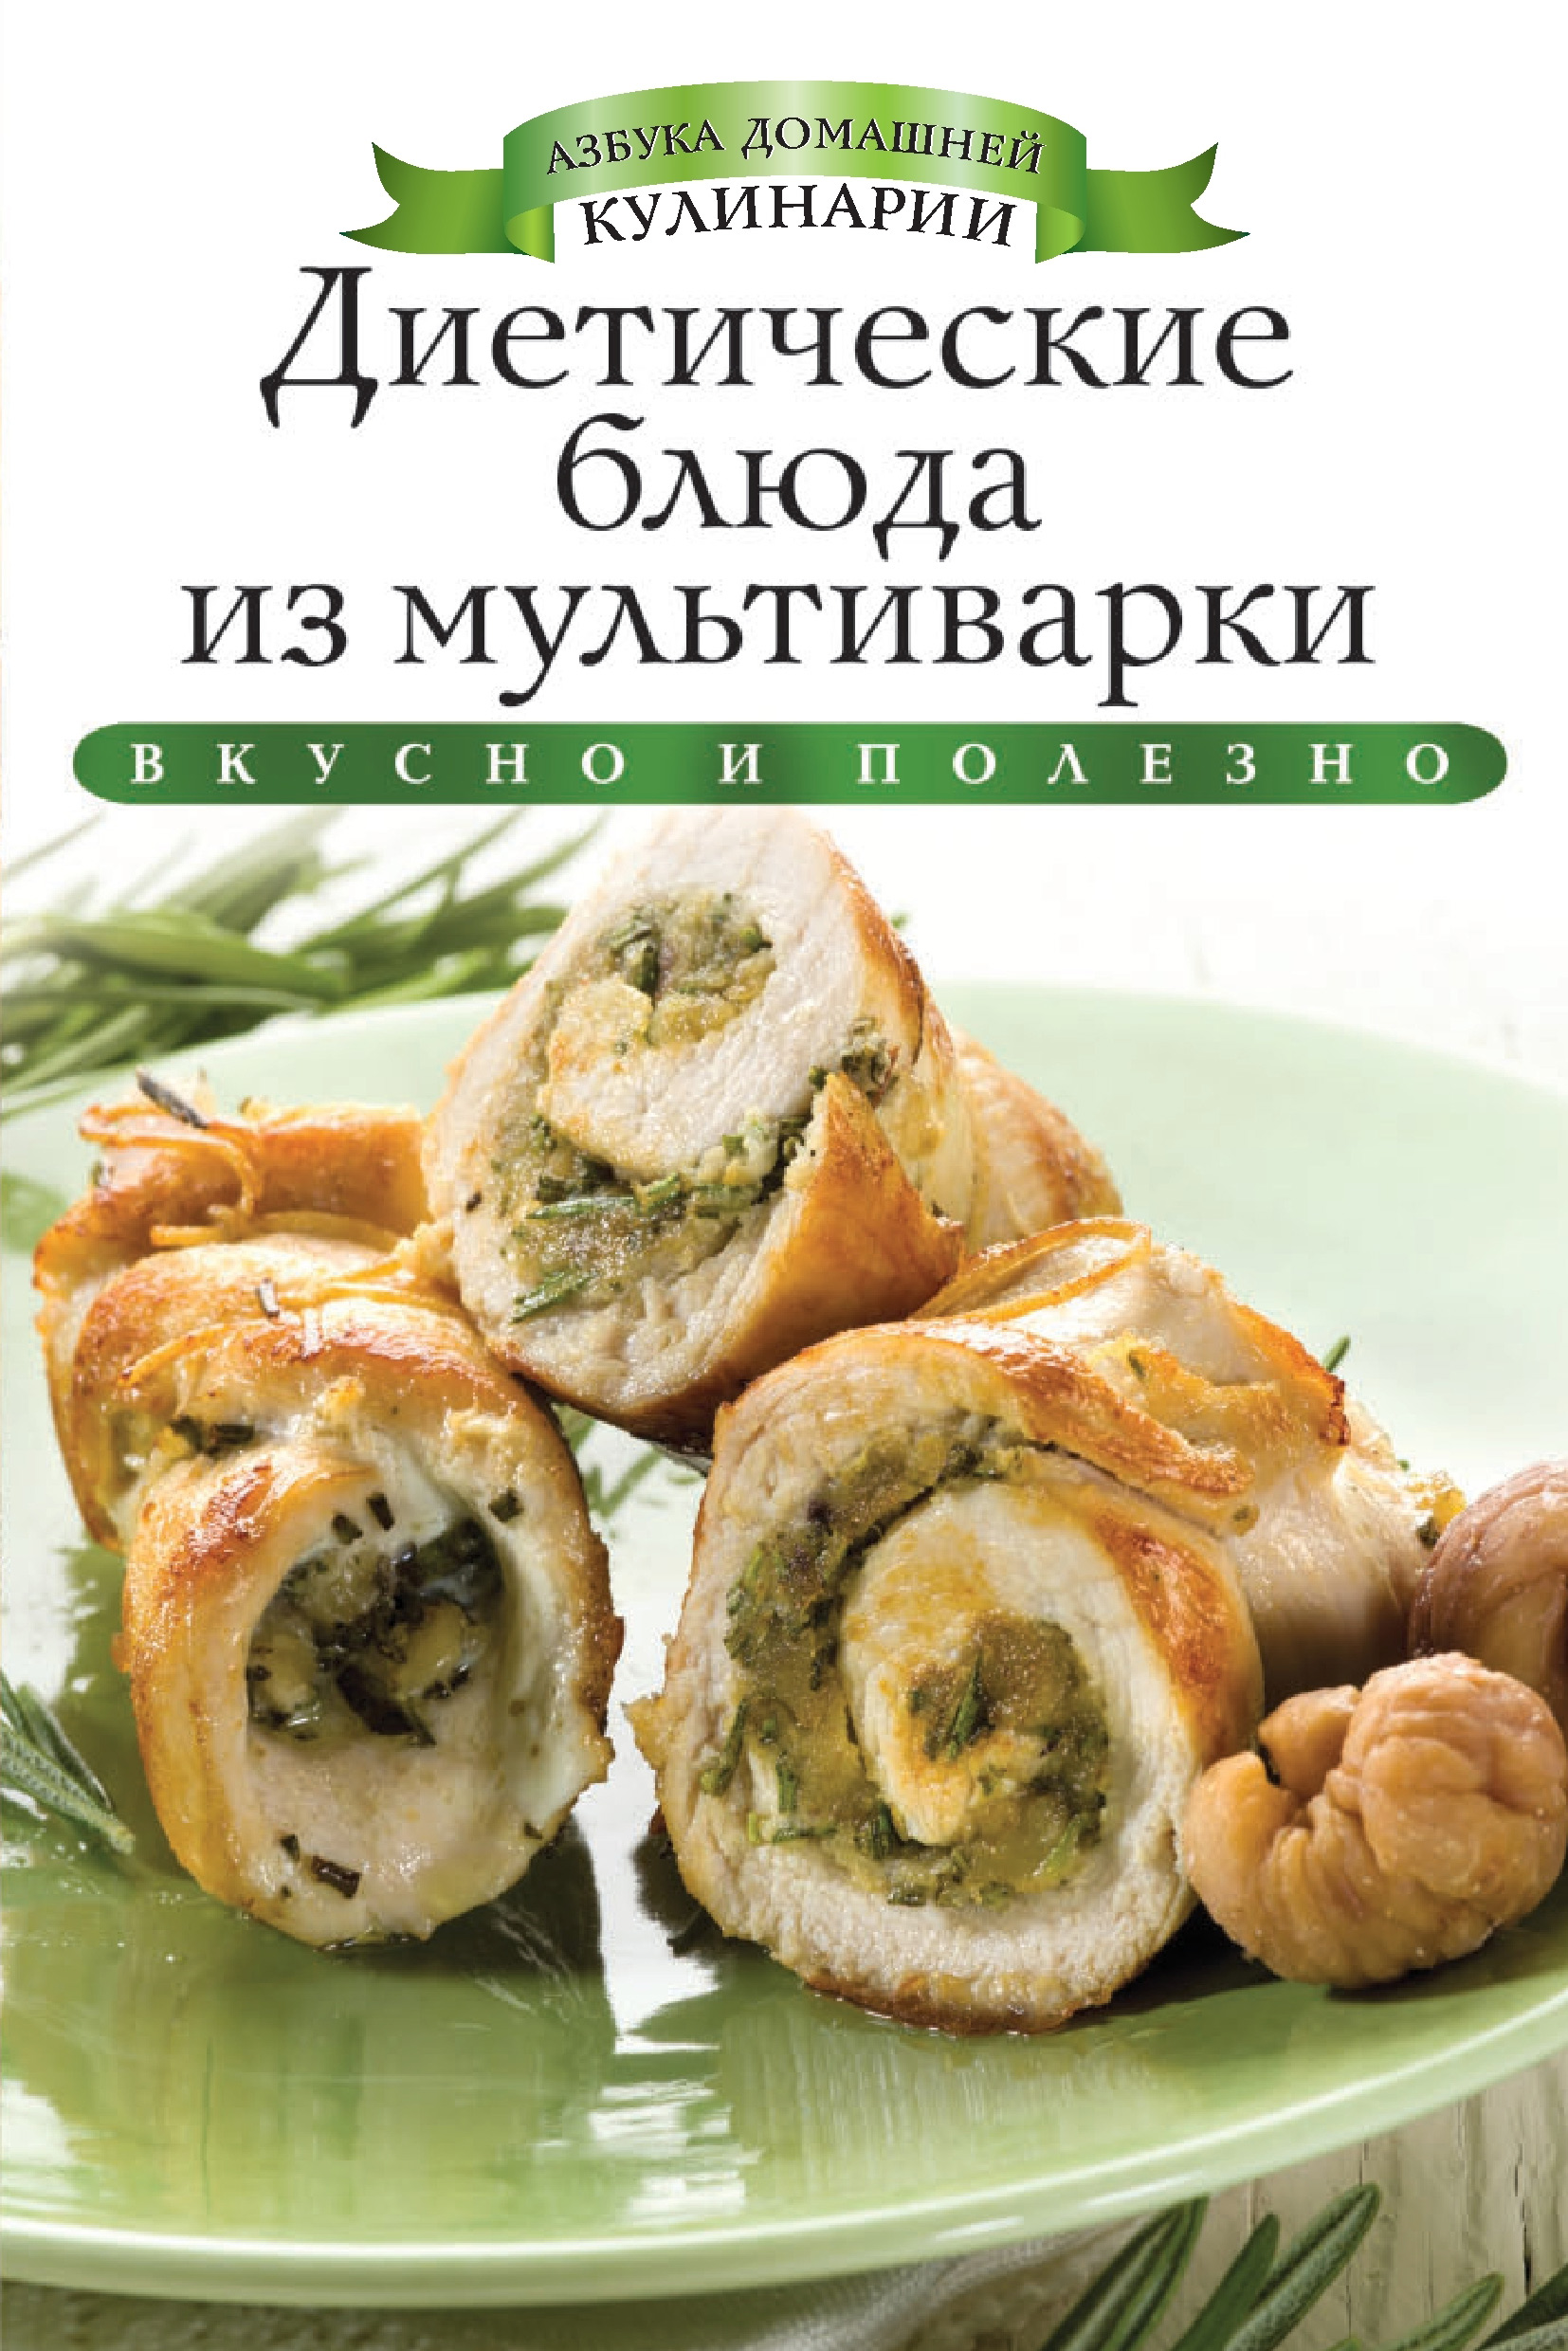 Рецепты для пароварки - готовим на пару - рецепты с фото на webmaster-korolev.ru ( рецепта пароварки)